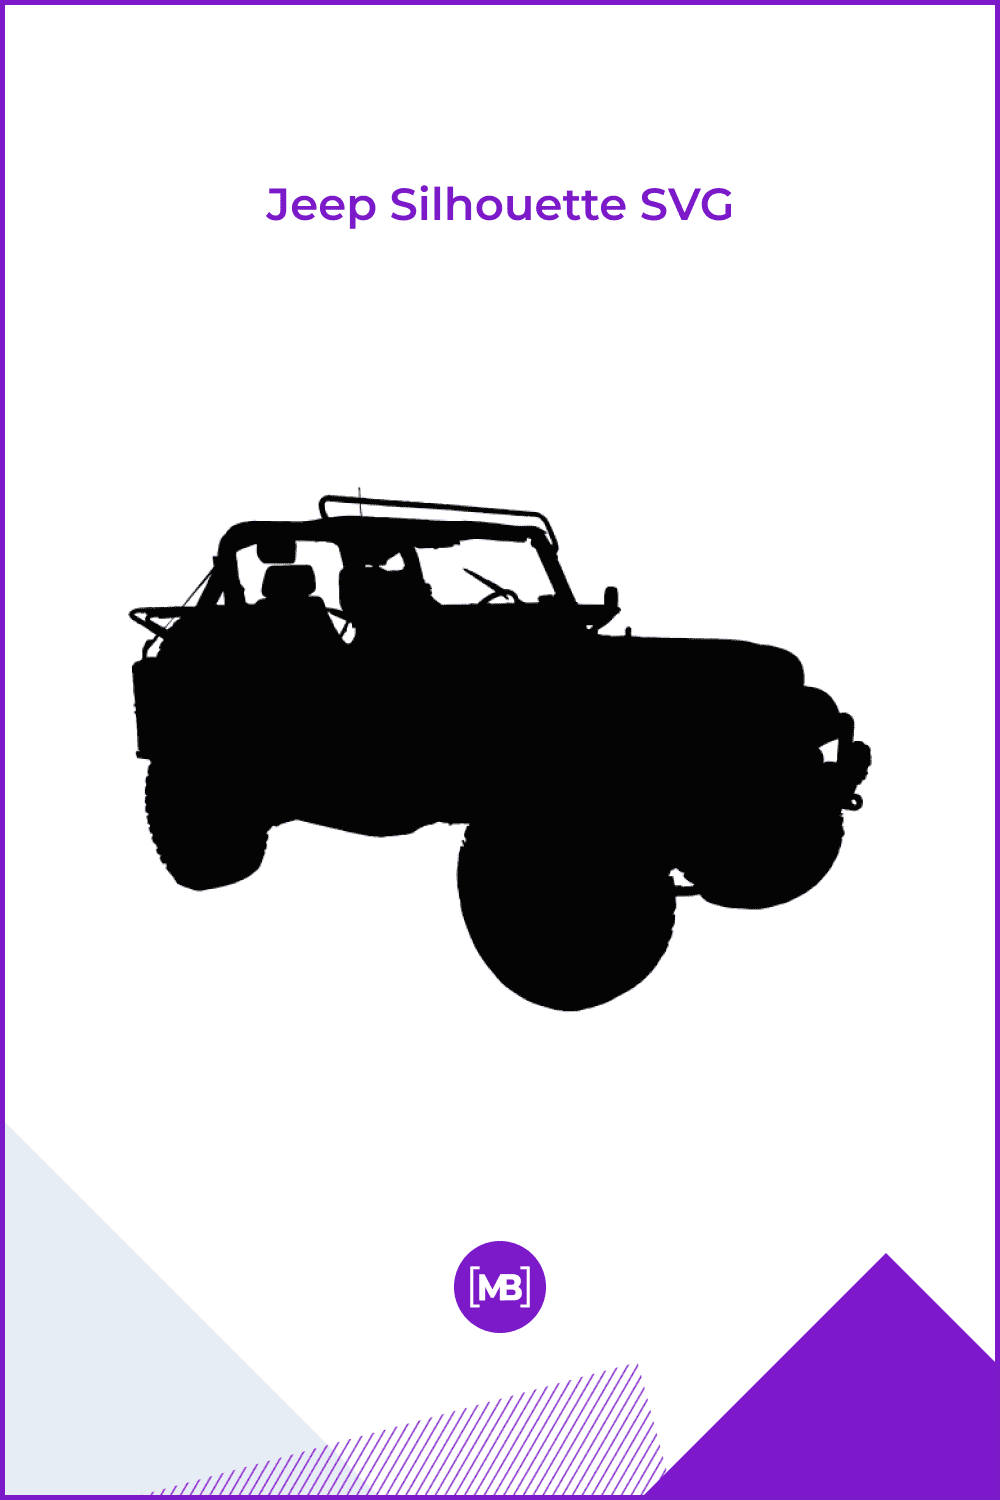 Jeep Silhouette SVG.